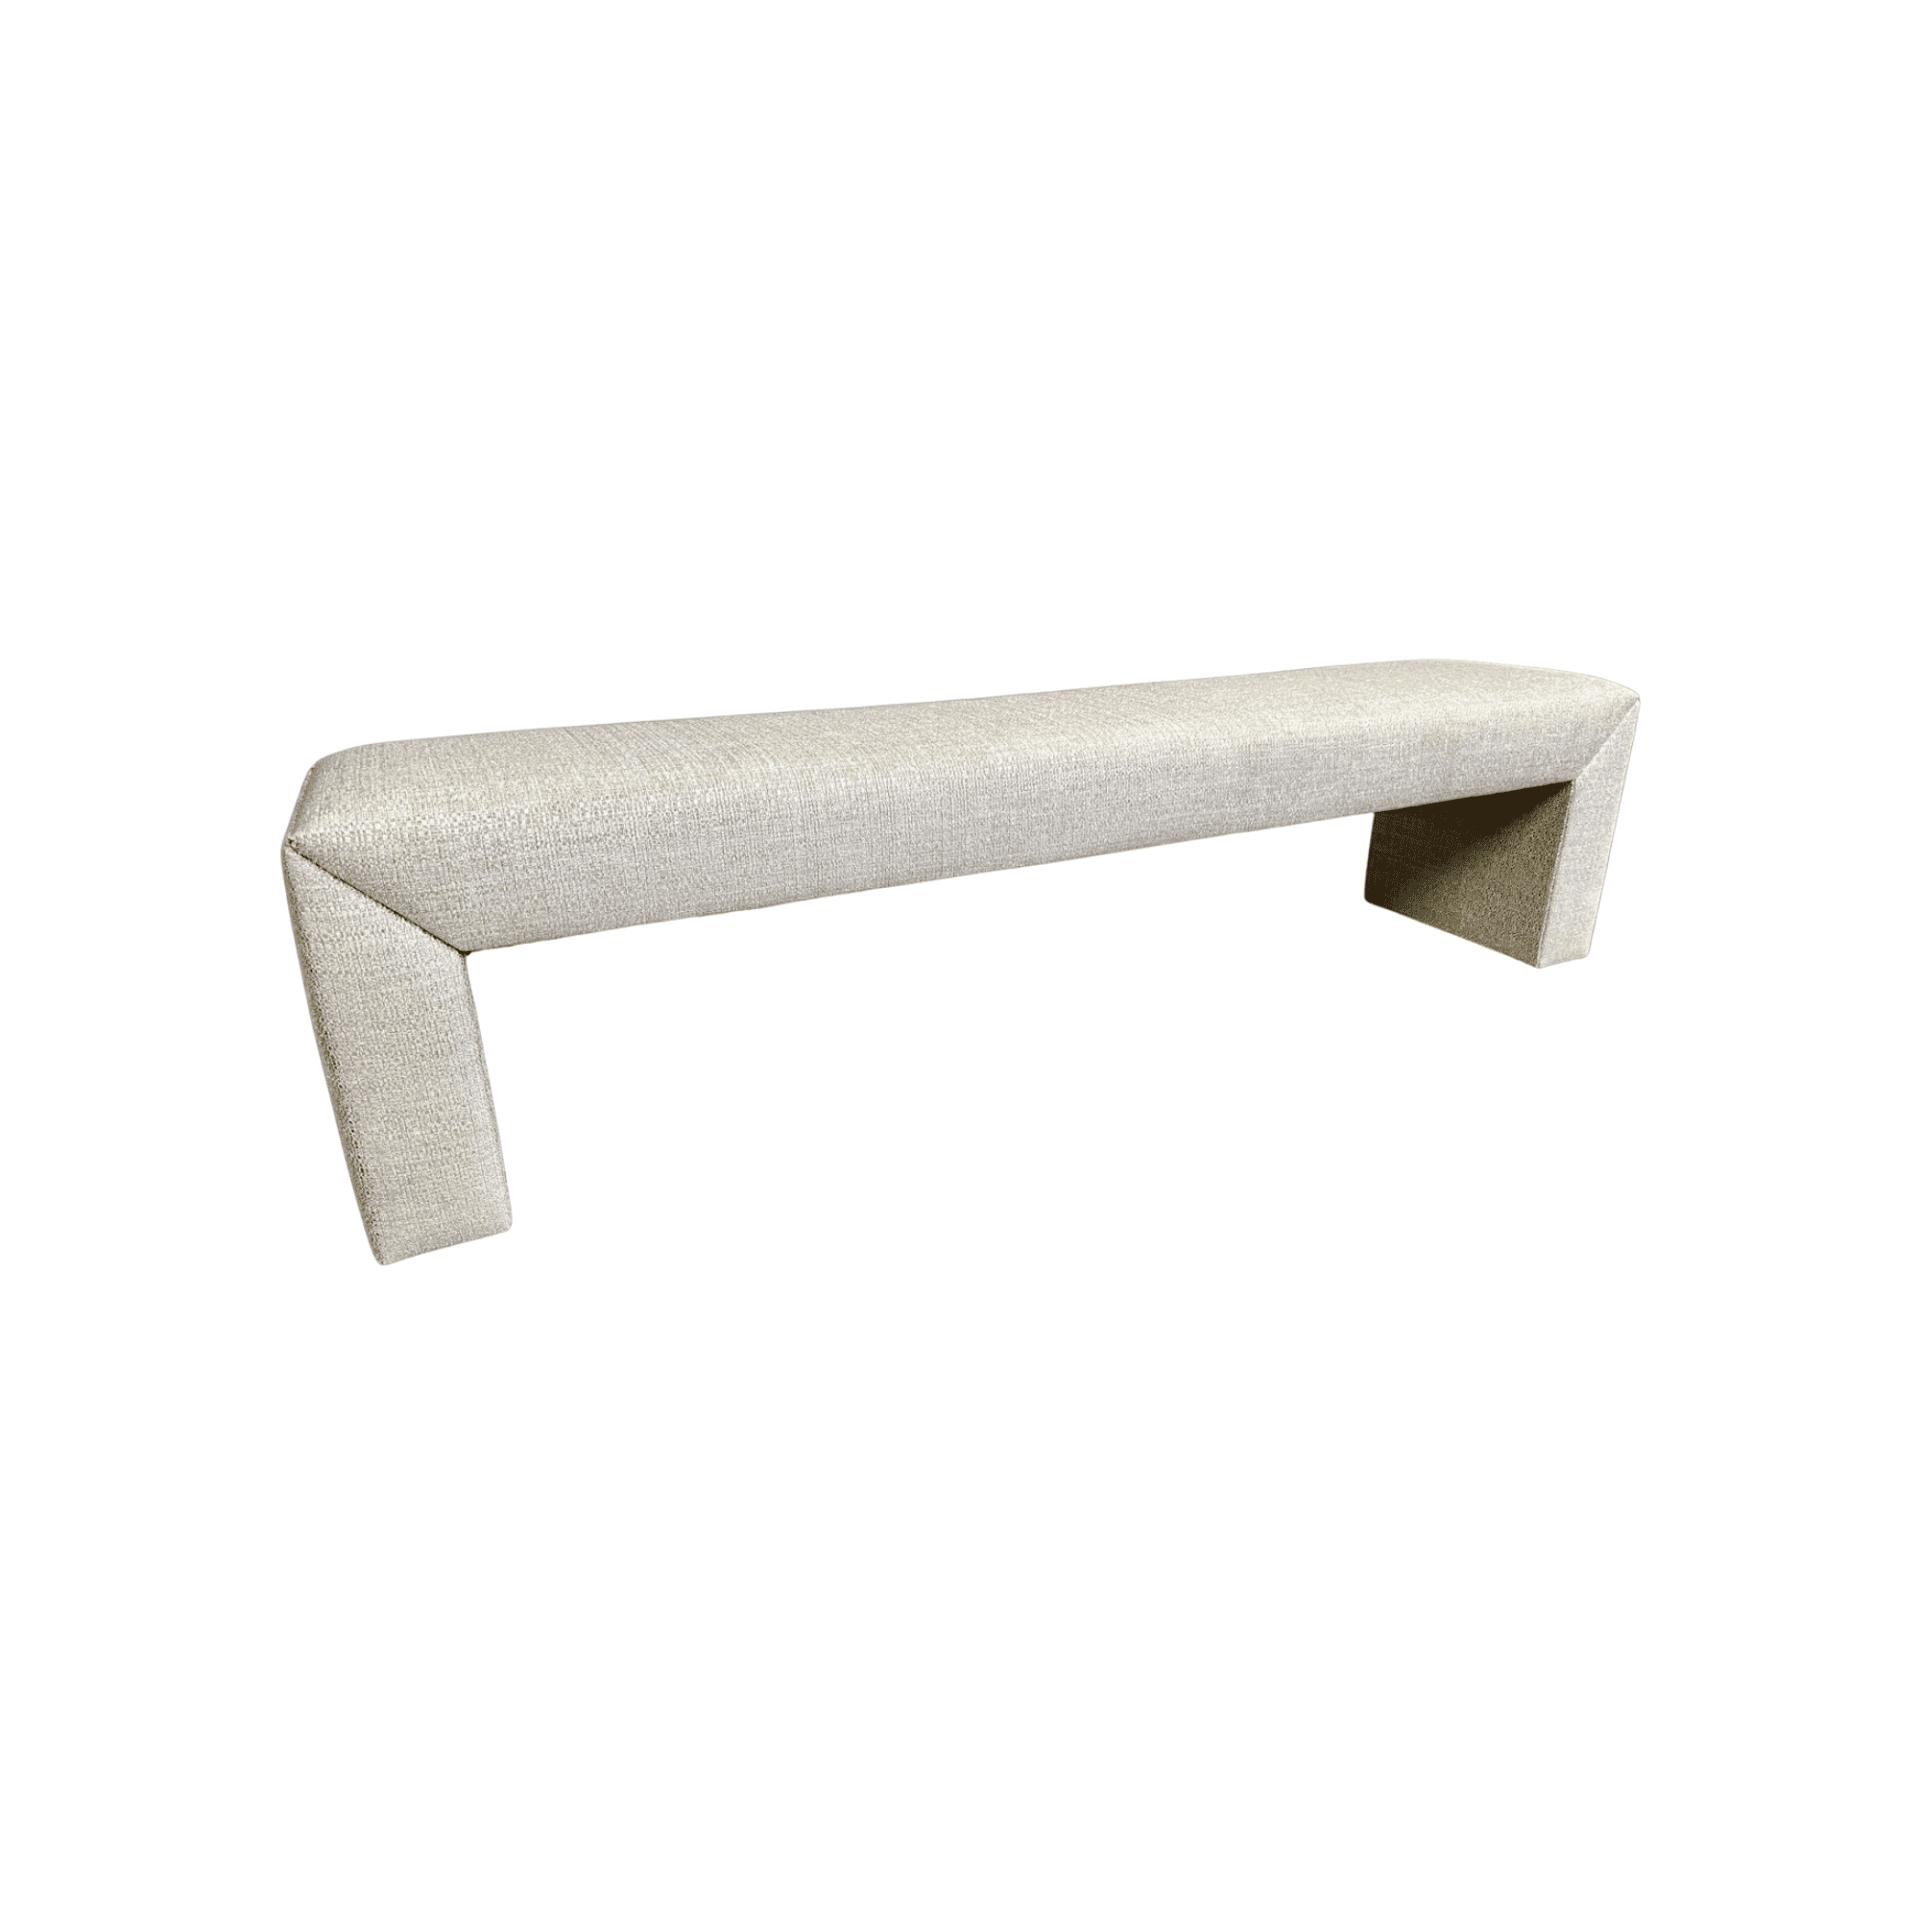 FREEMAN Upholstered Bench, Luxury Furniture - Blend Home Furnishings